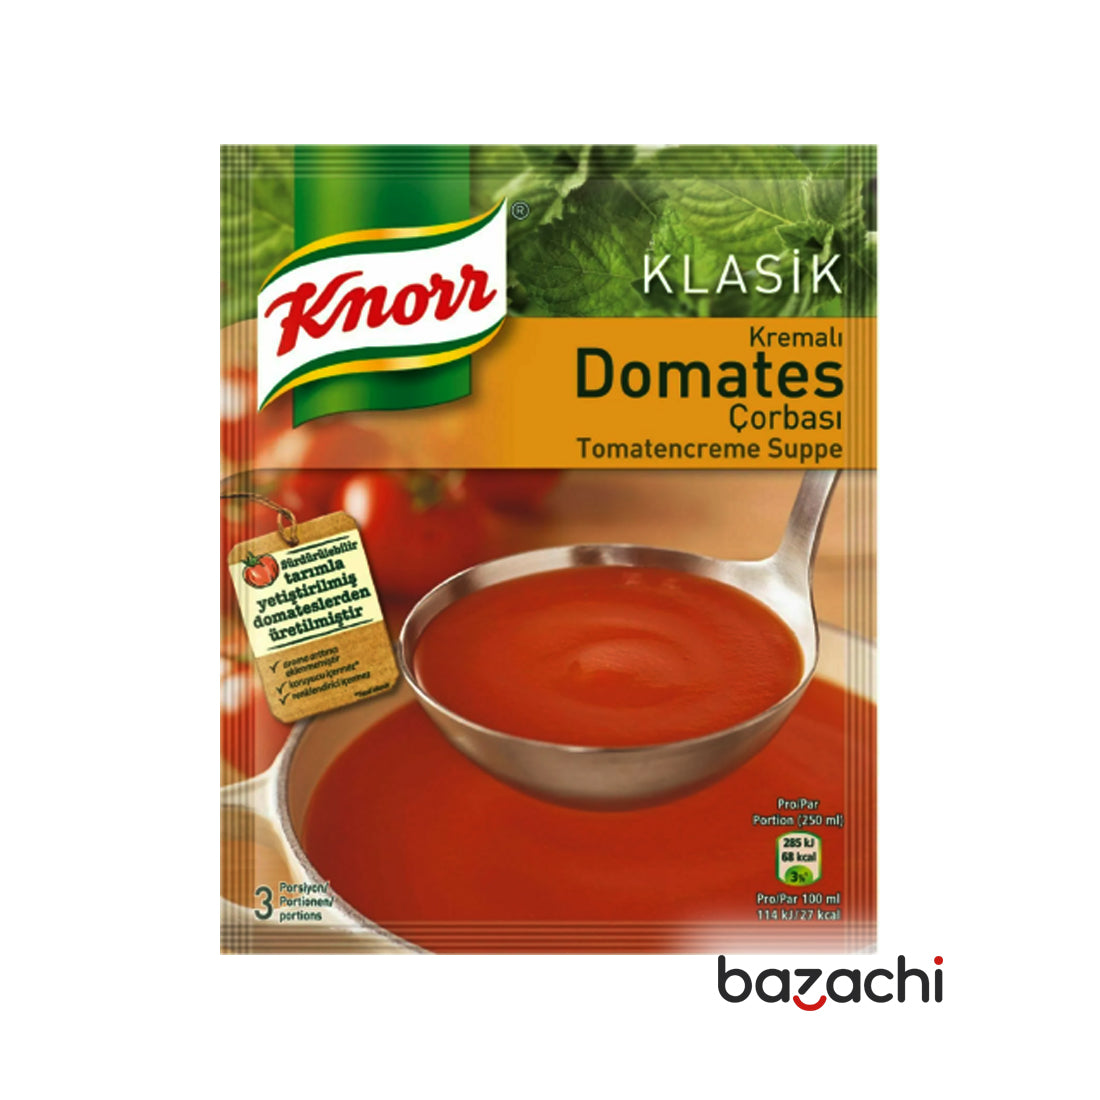 Knorr Cream Classic Tomato Soup - Domates Corbasi (74g)